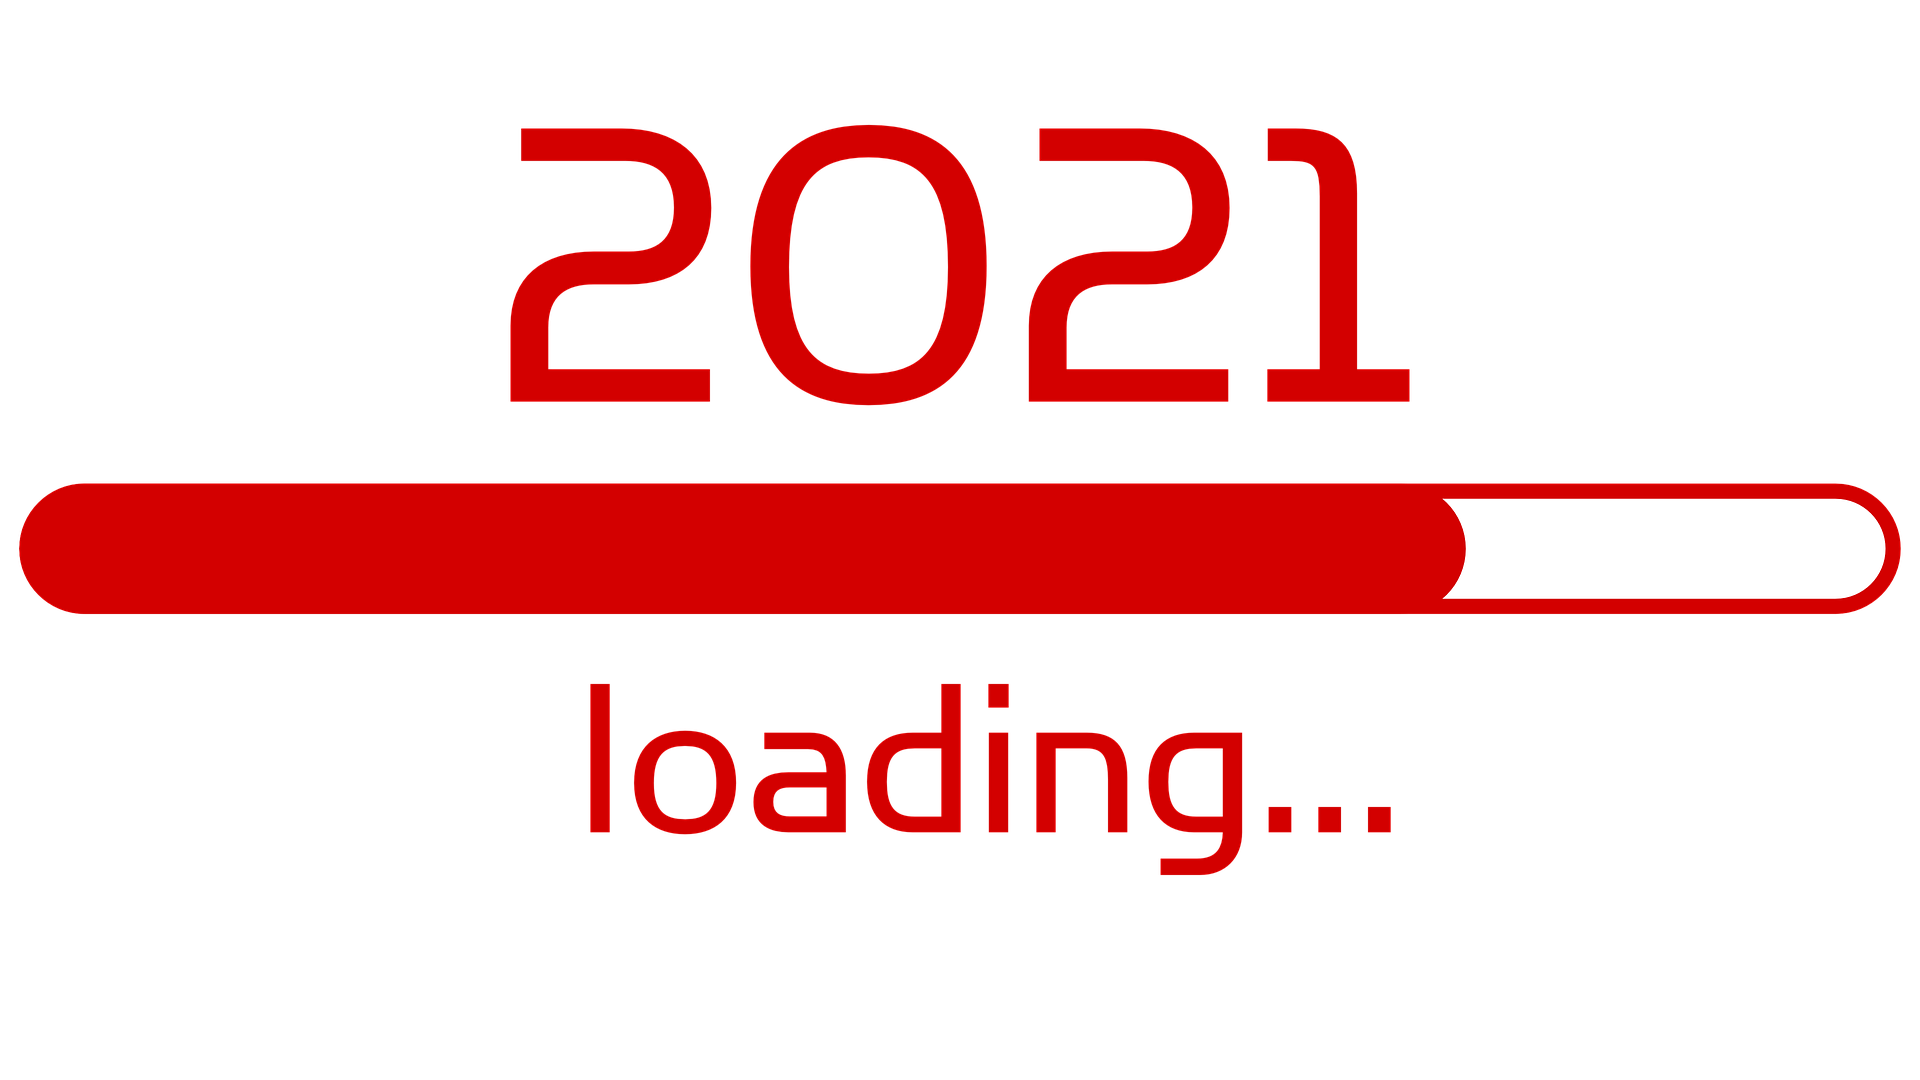 loading bar 2021